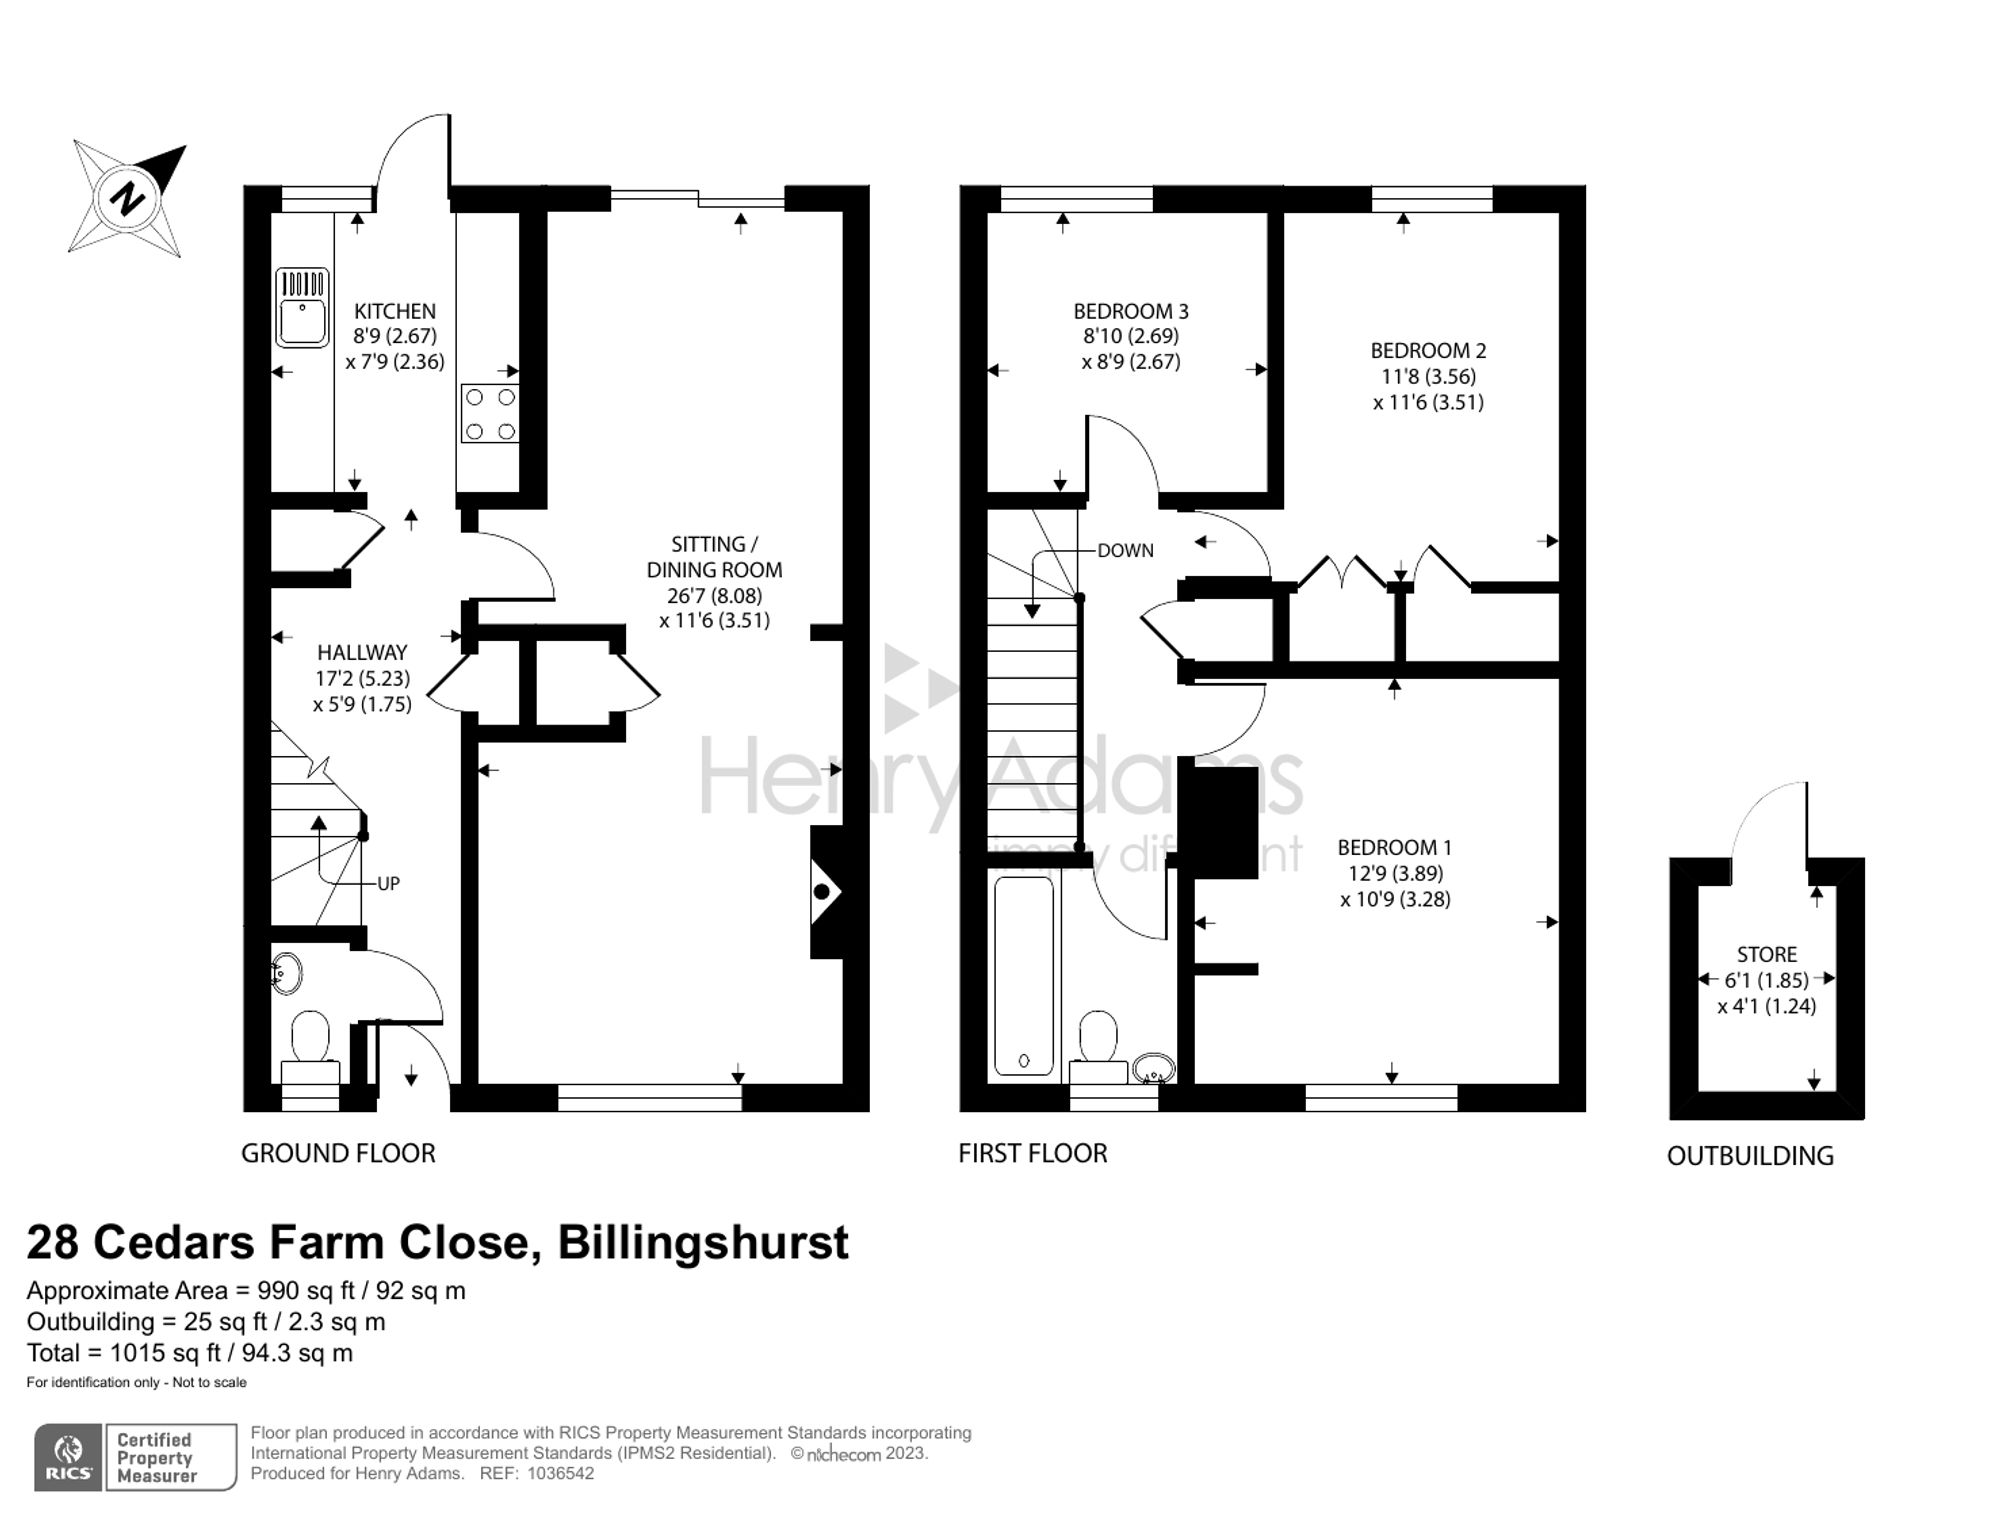 Cedars Farm Close, Billingshurst, RH14 floorplans